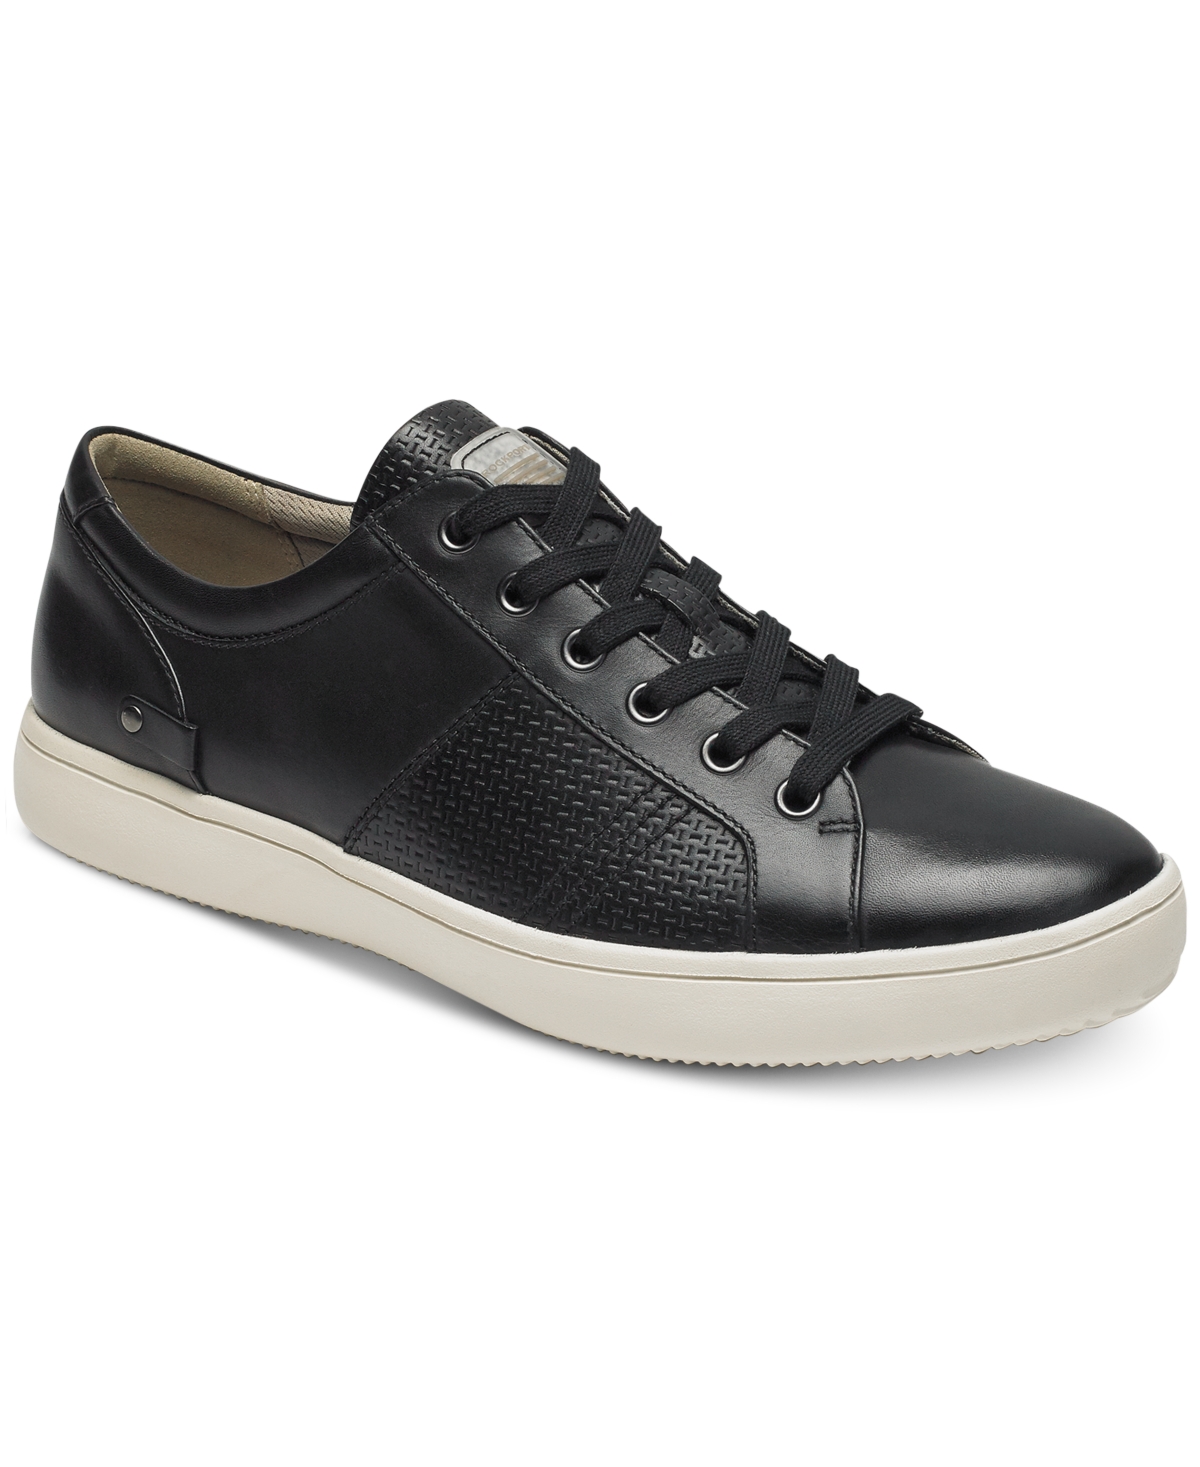 Men's Colle Tie Slip On Sneaker Shoes - Black